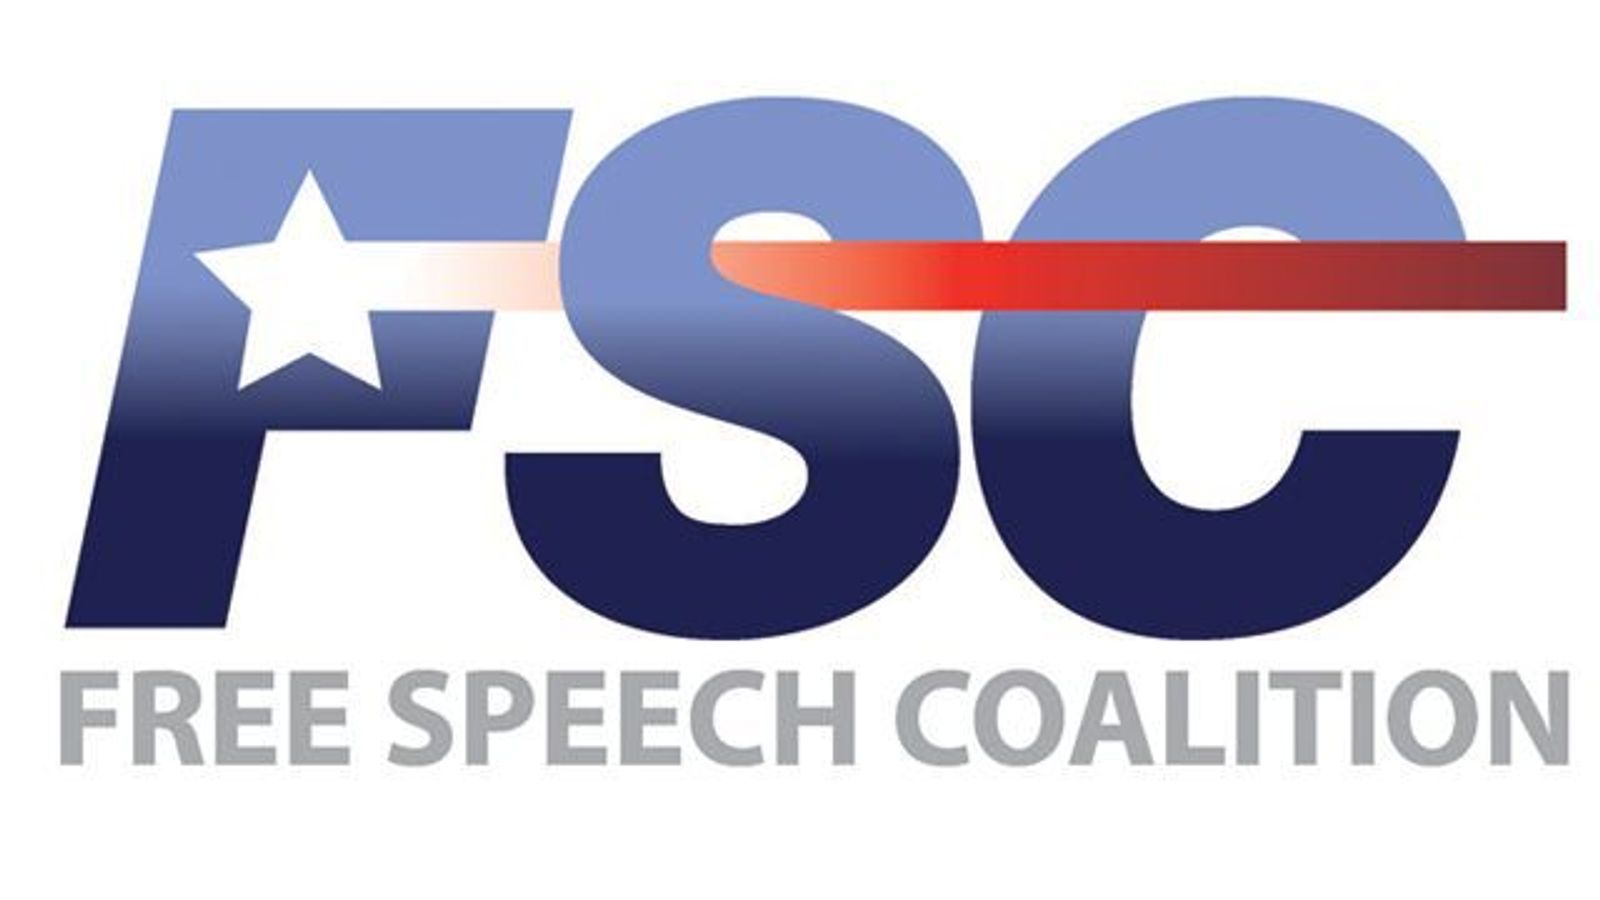 Nomination Period for FSC BoD Election Opens Friday, Nov. 1